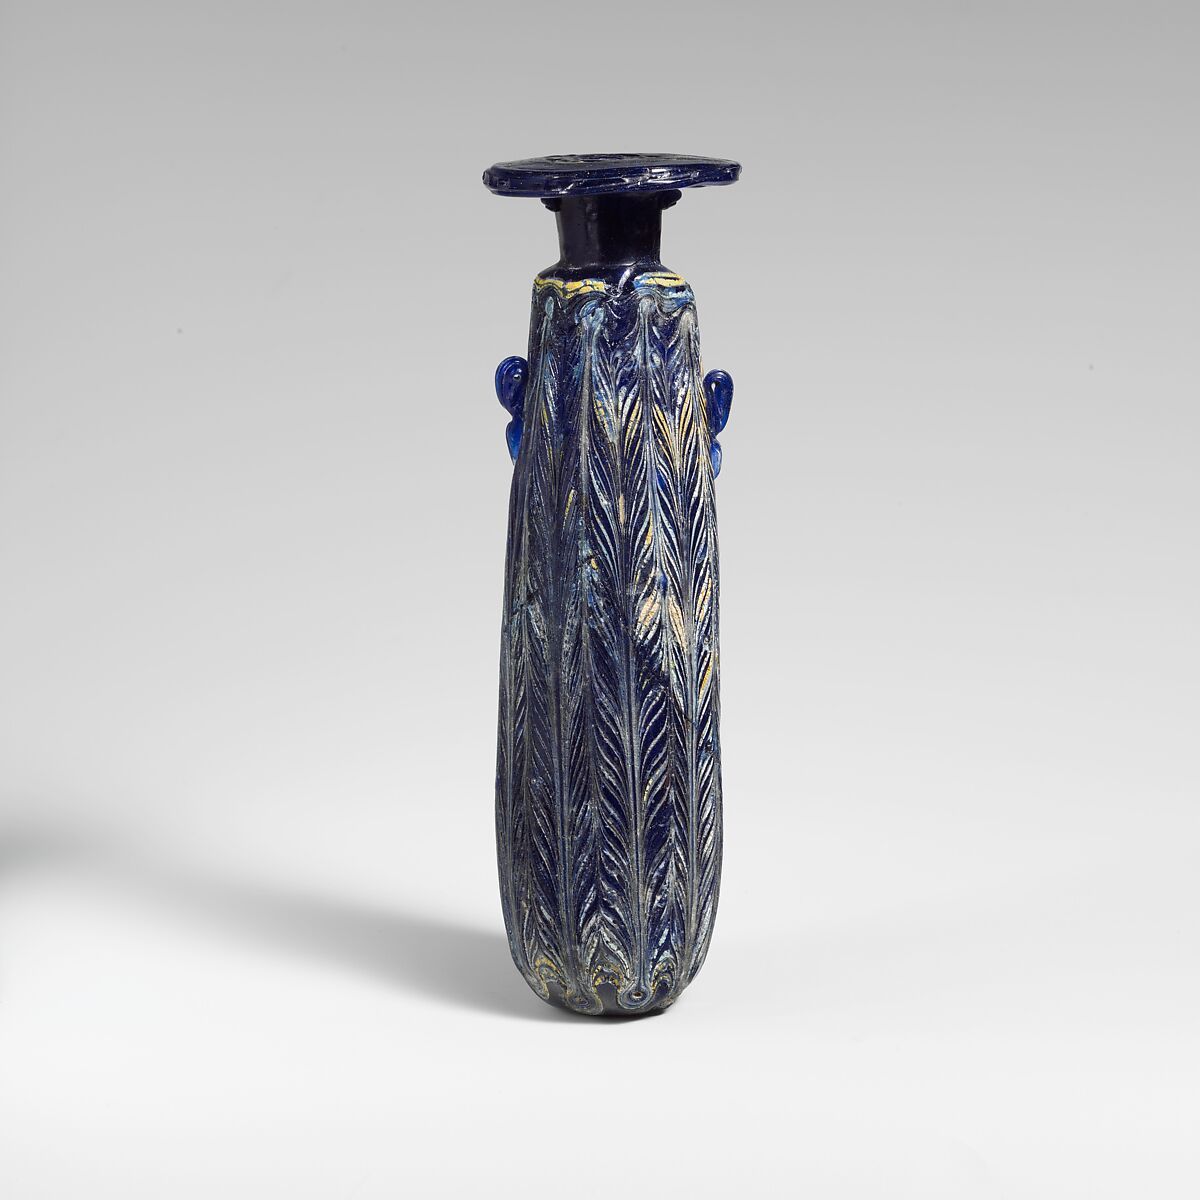 Glass alabastron (perfume bottle), Glass, Eastern Mediterranean or Italian 